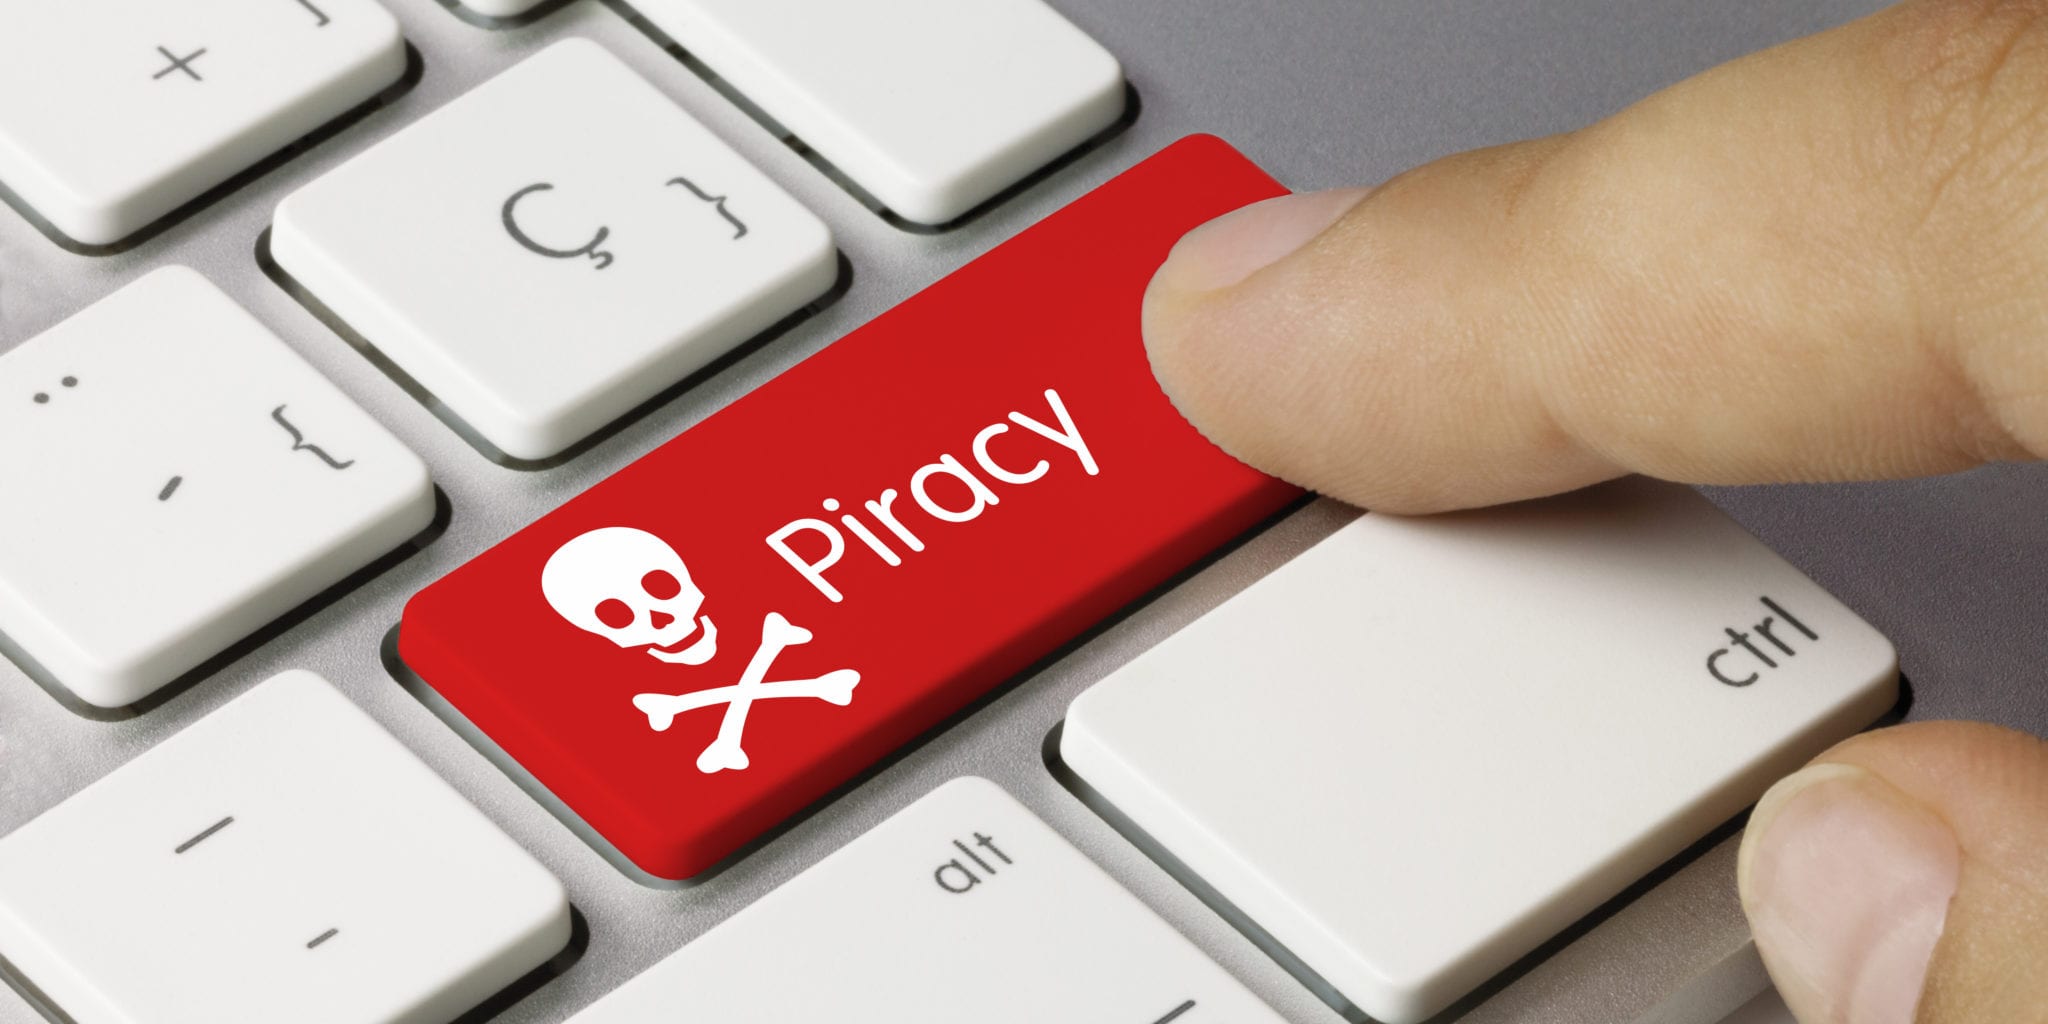 John Doe Orders to stop piracy